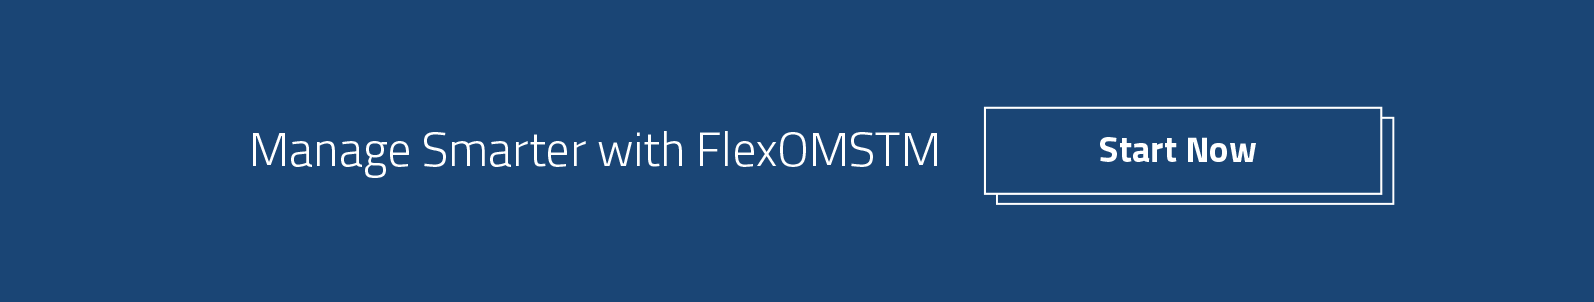 Manage Smarter with FlexOMSTM. Start Now »